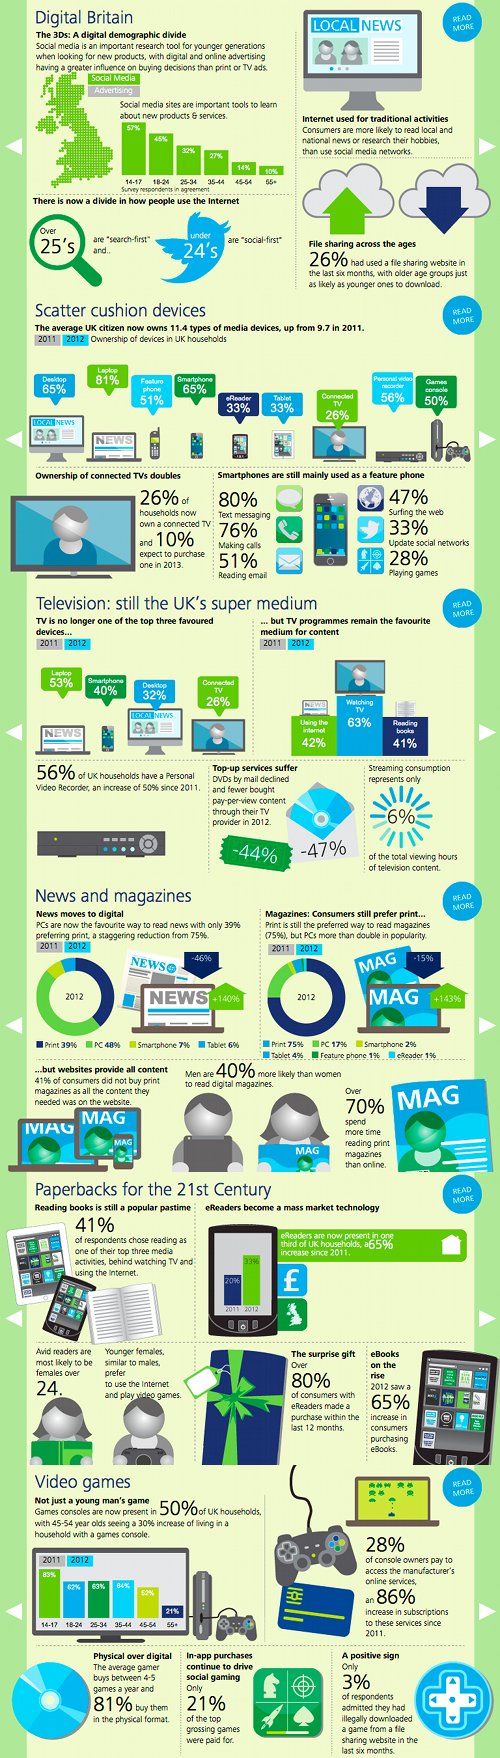 Deloitte’s UK Media Consumer survey ’13